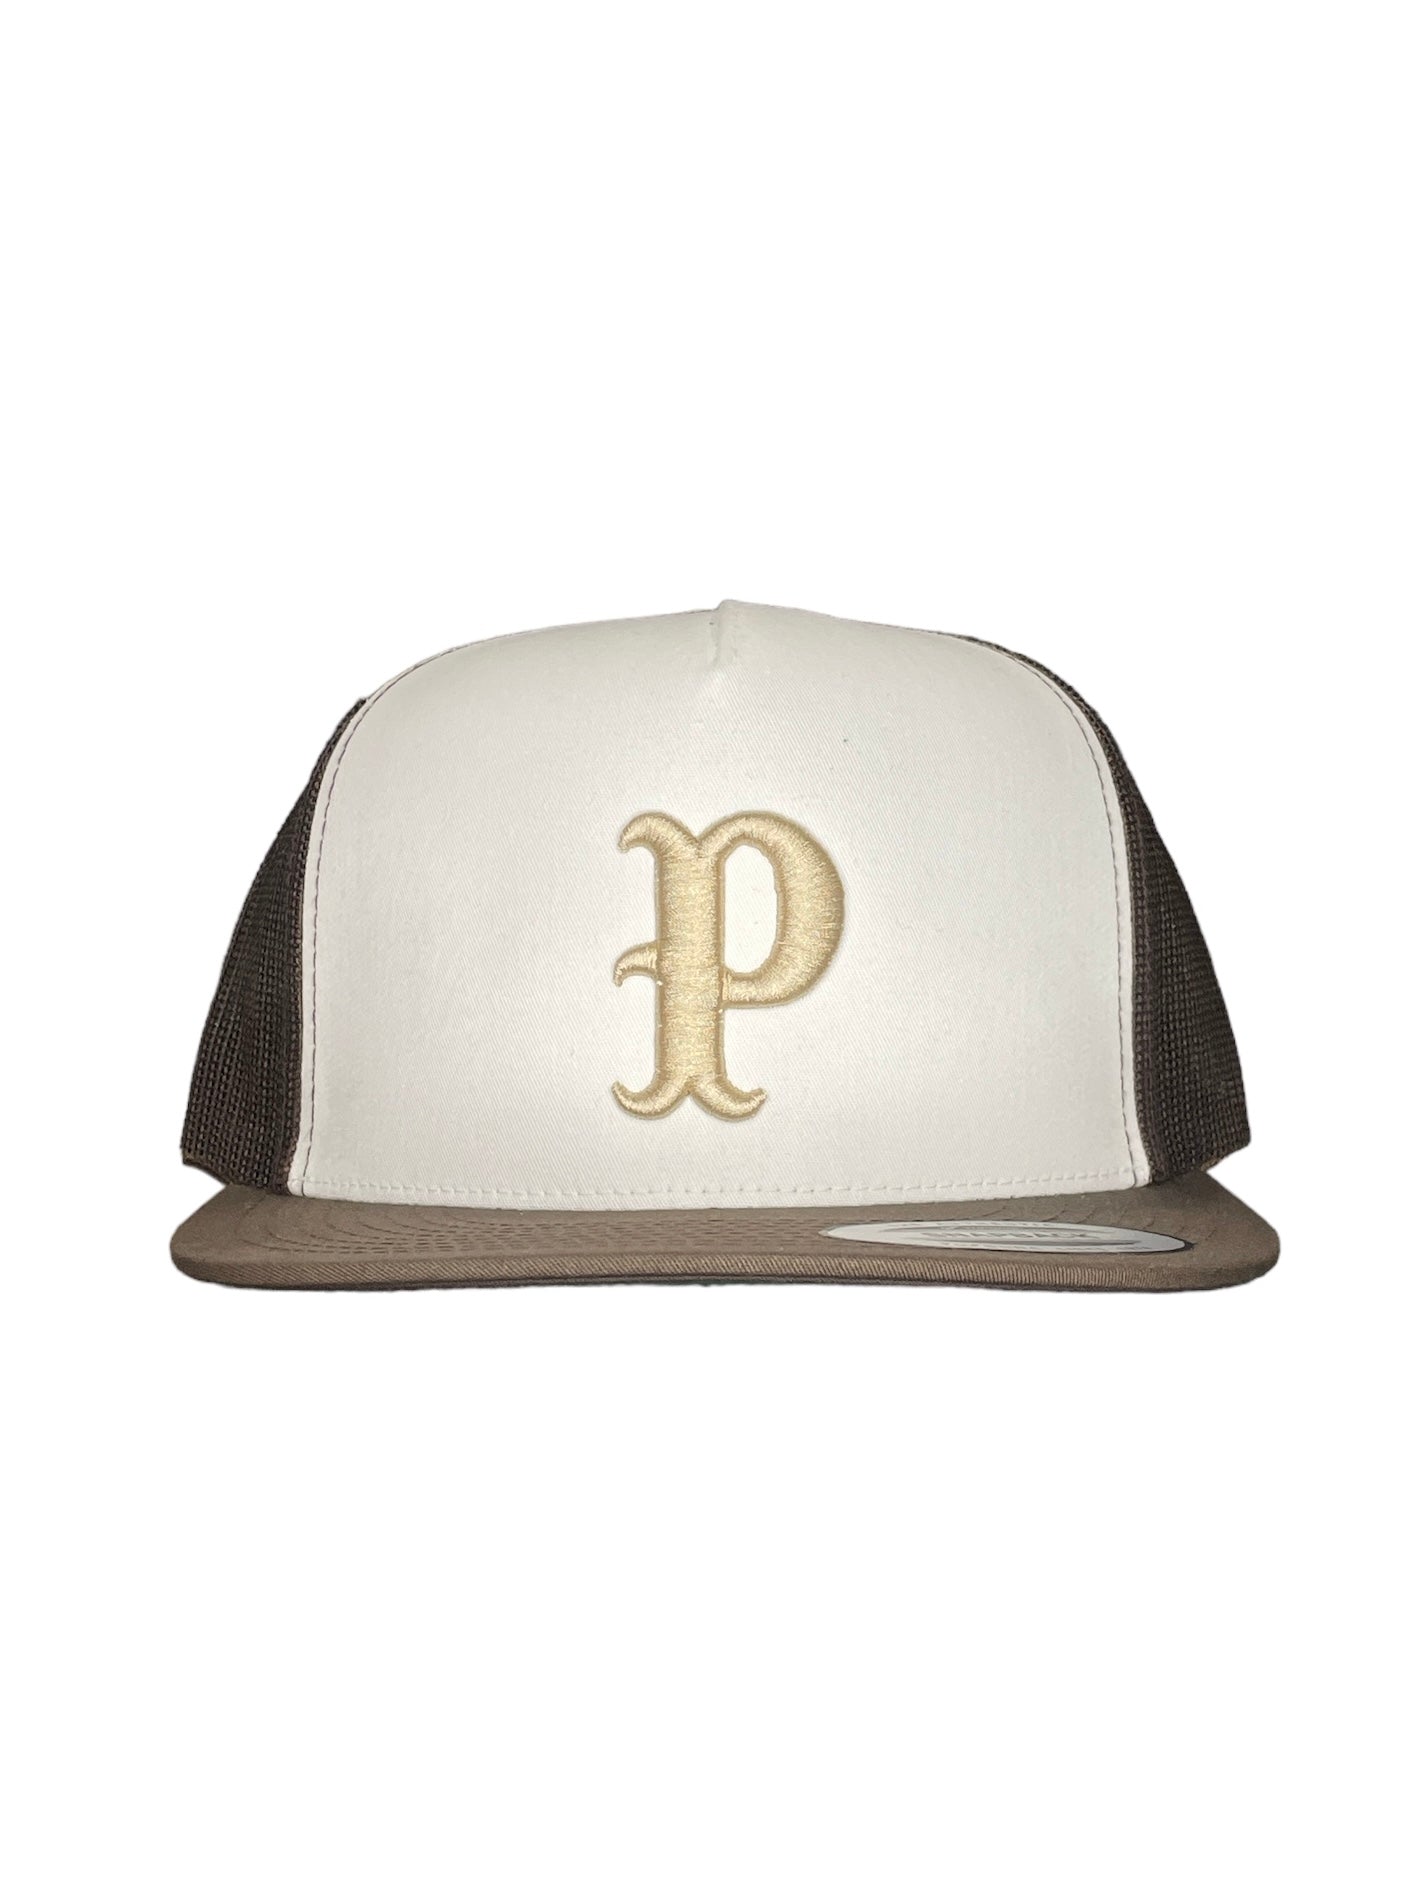 Pawnshop Embroidered "P" Trucker Hat